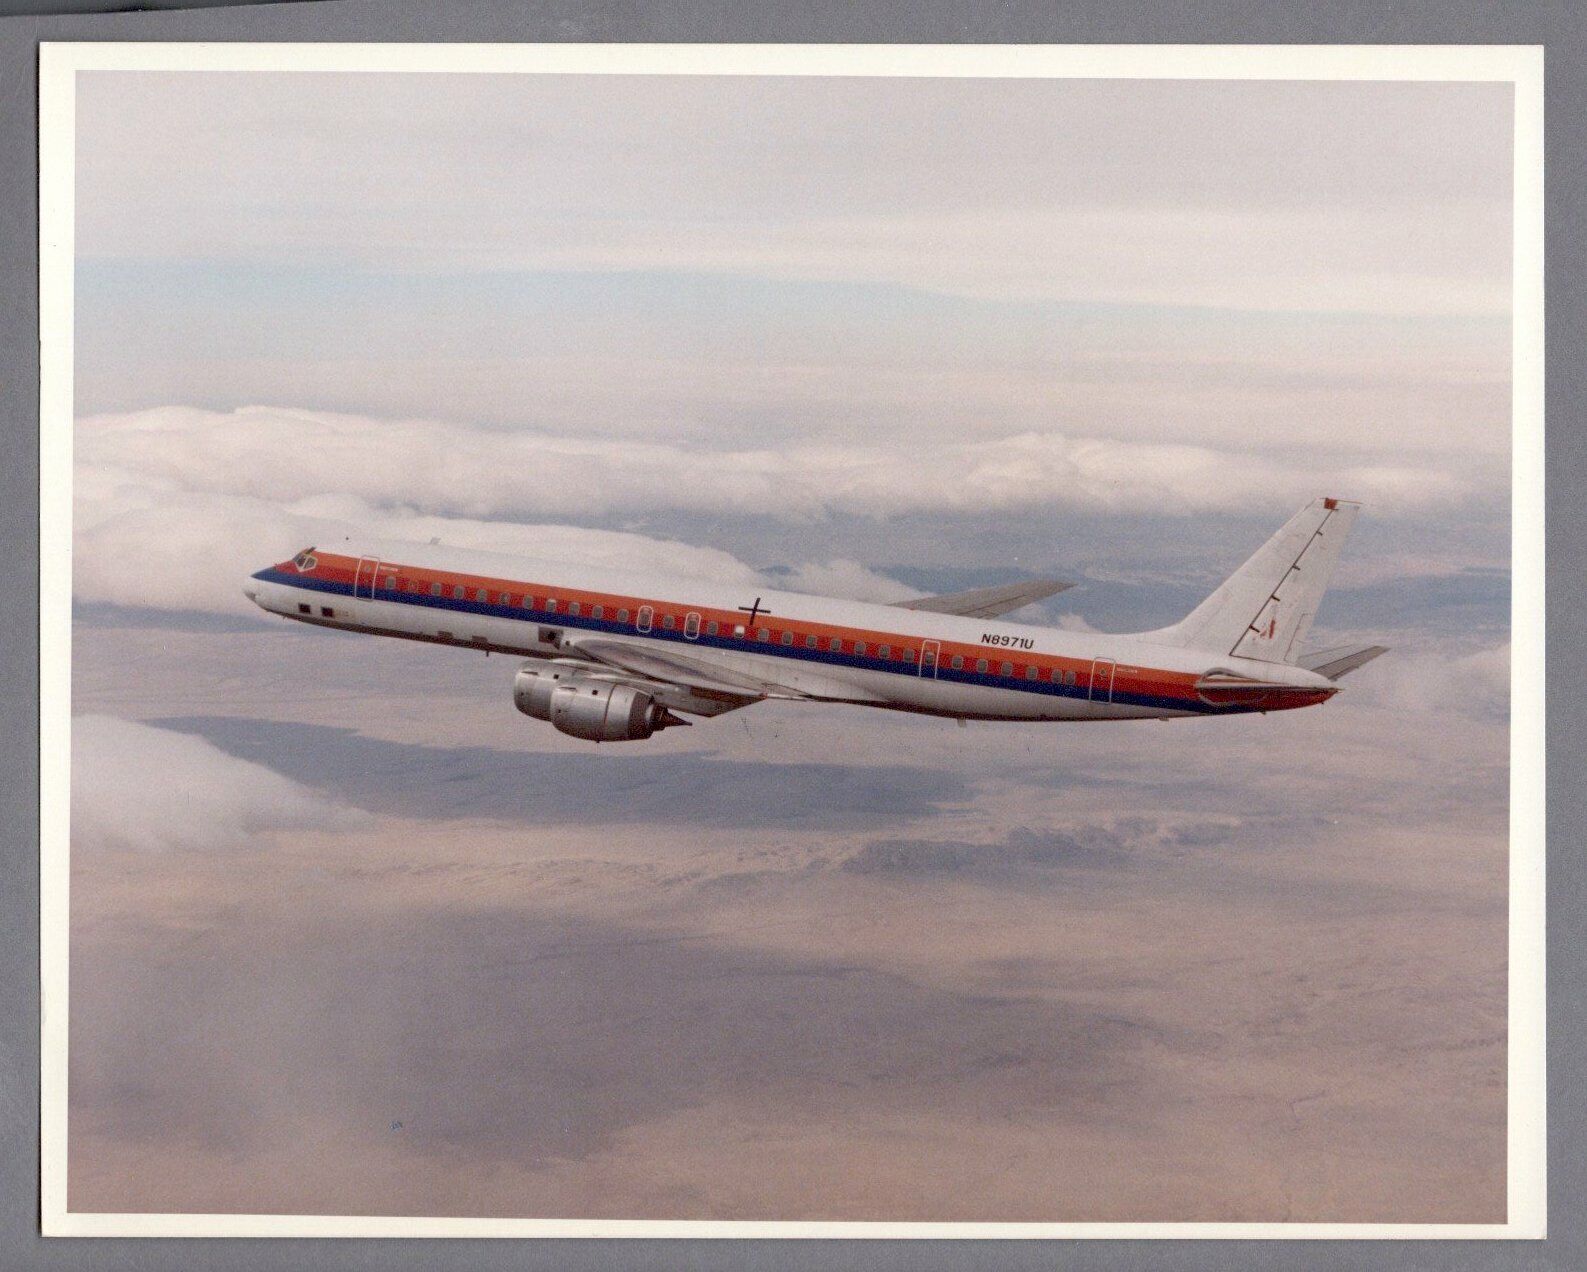 UNITED AIRLINES DOUGLAS DC-8 70 SERIES LARGE VINTAGE MANUFACTURERS PHOTO